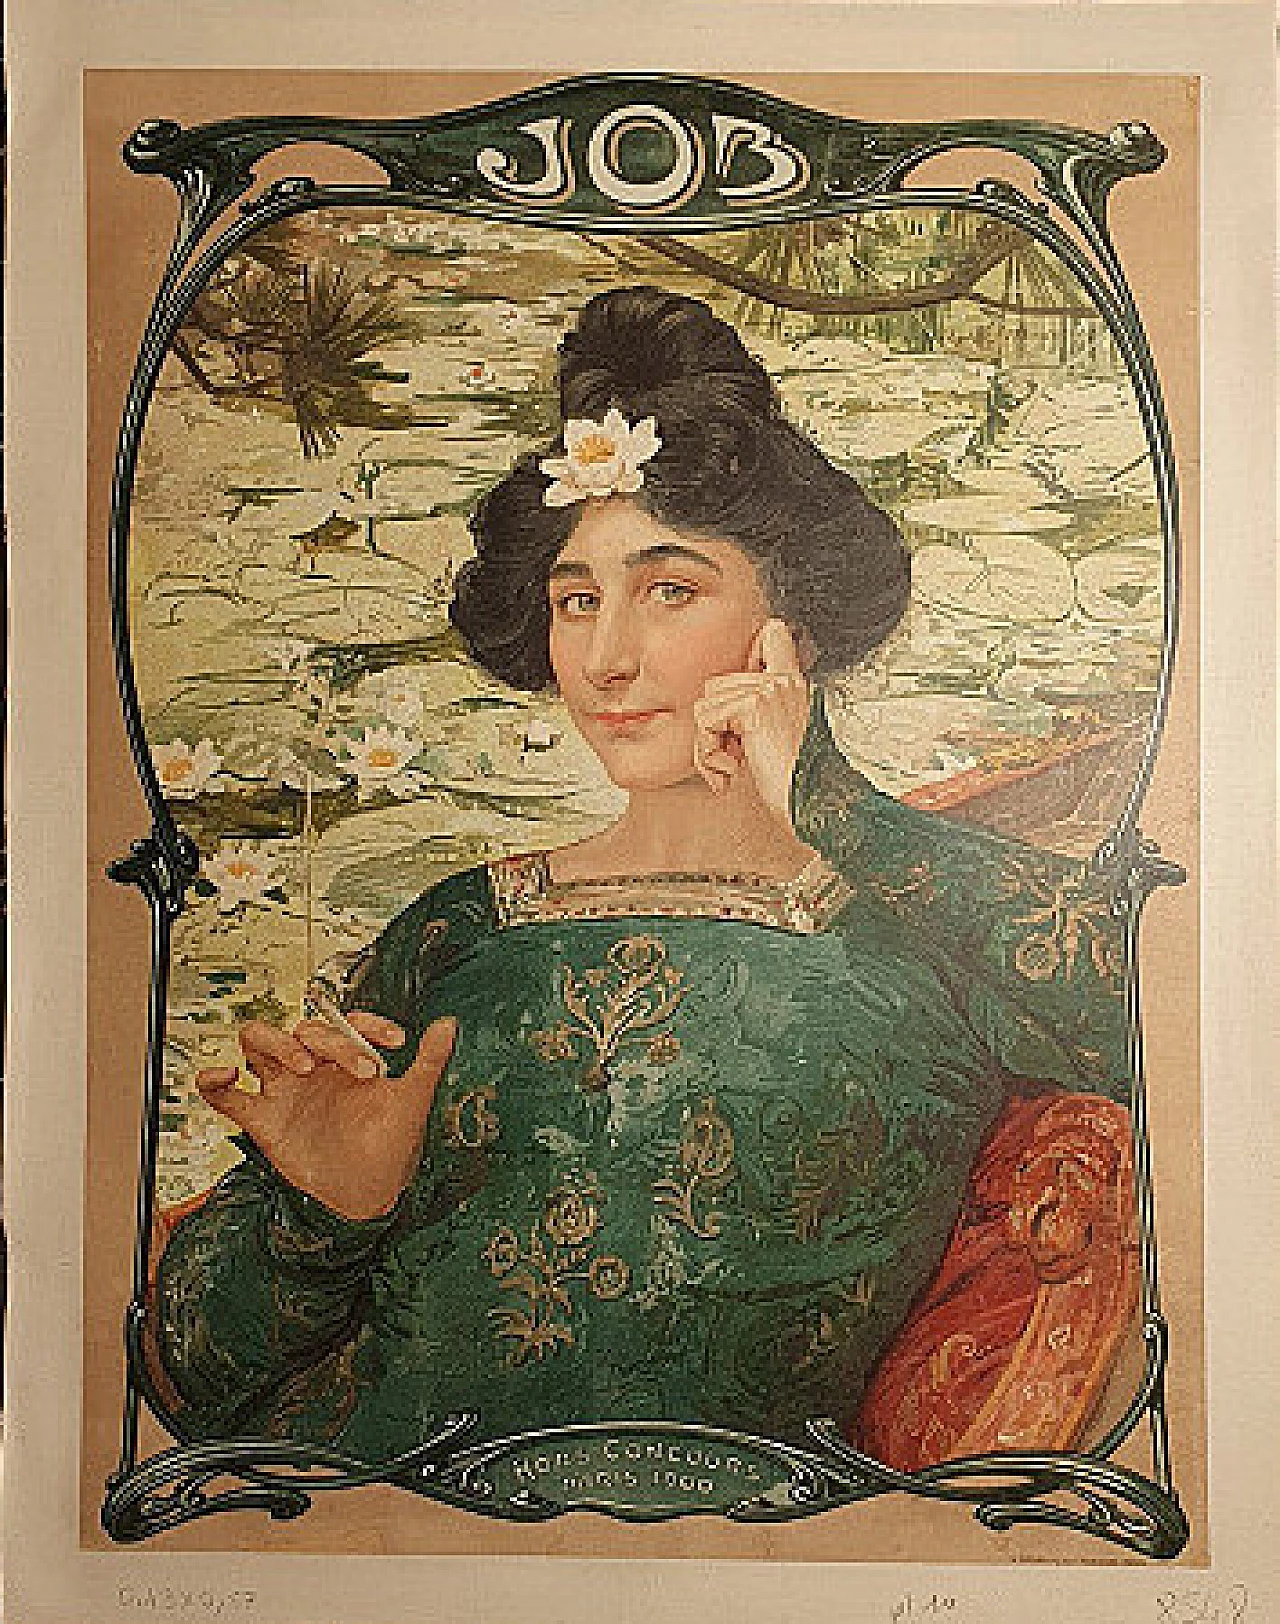 Laminated advertising poster for Job cigarette brand, 1900 7